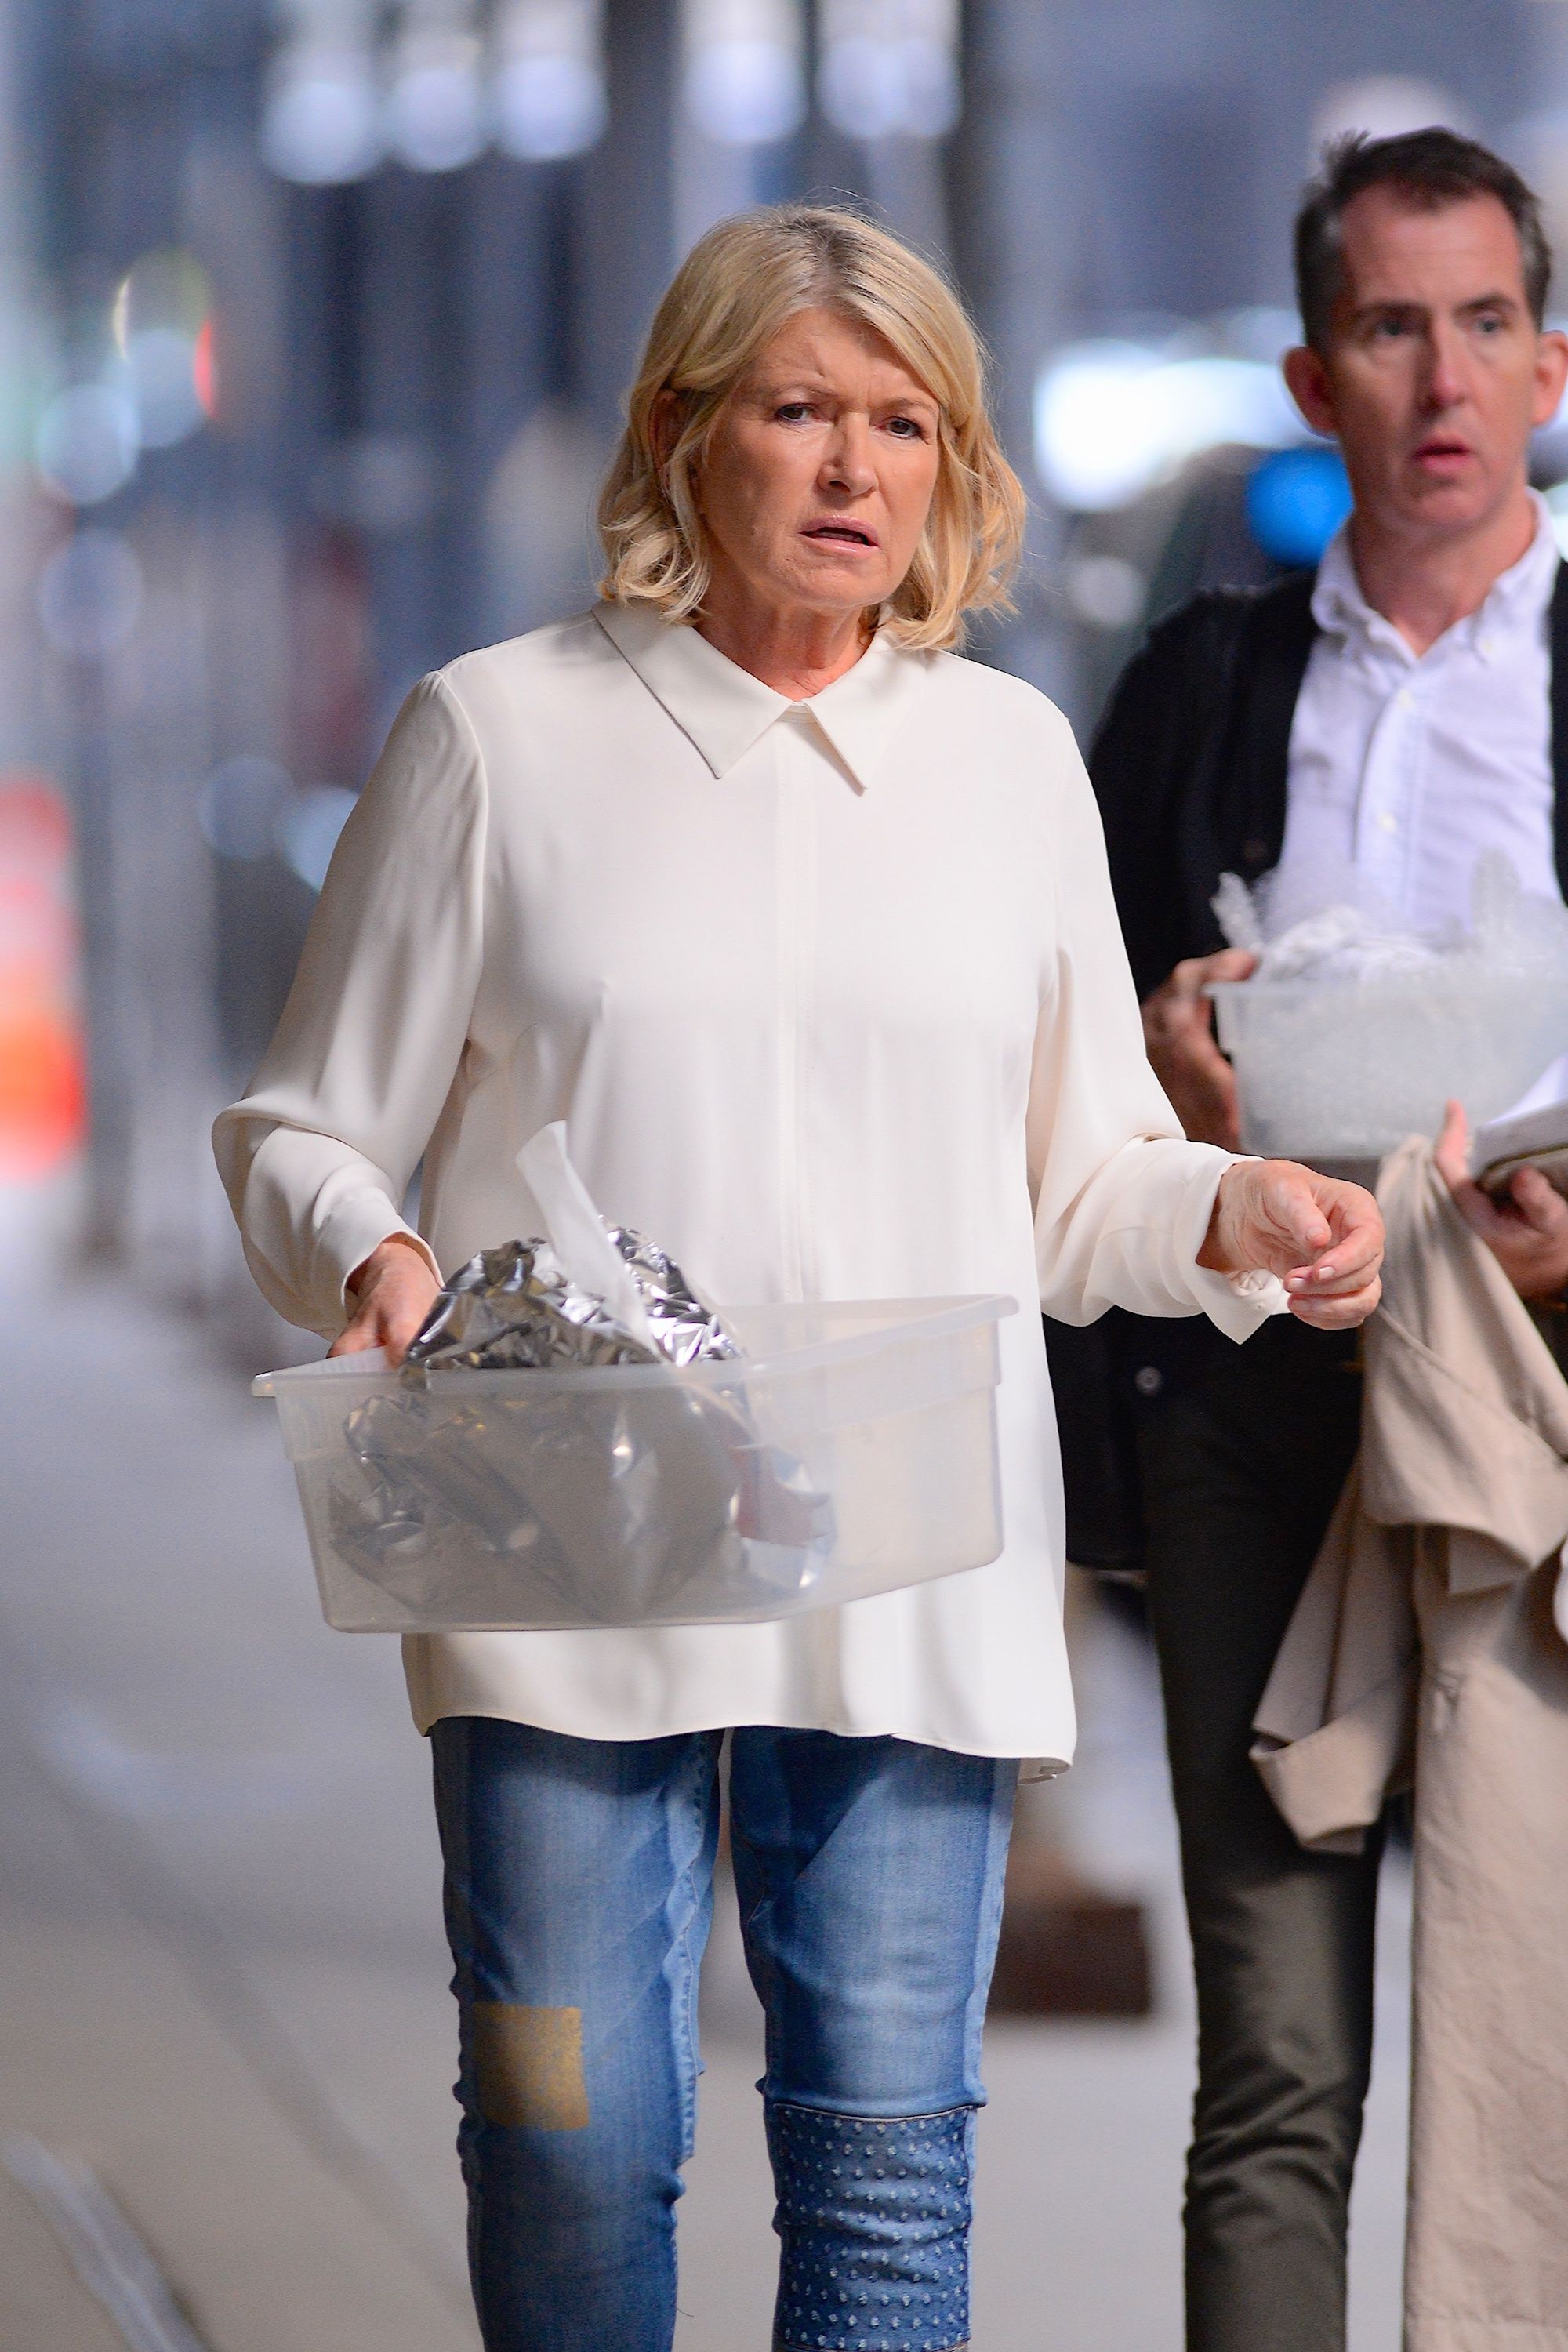 Martha Stewart walking in Manhattan on September 26, 2018 in New York City. | Source: Getty Images